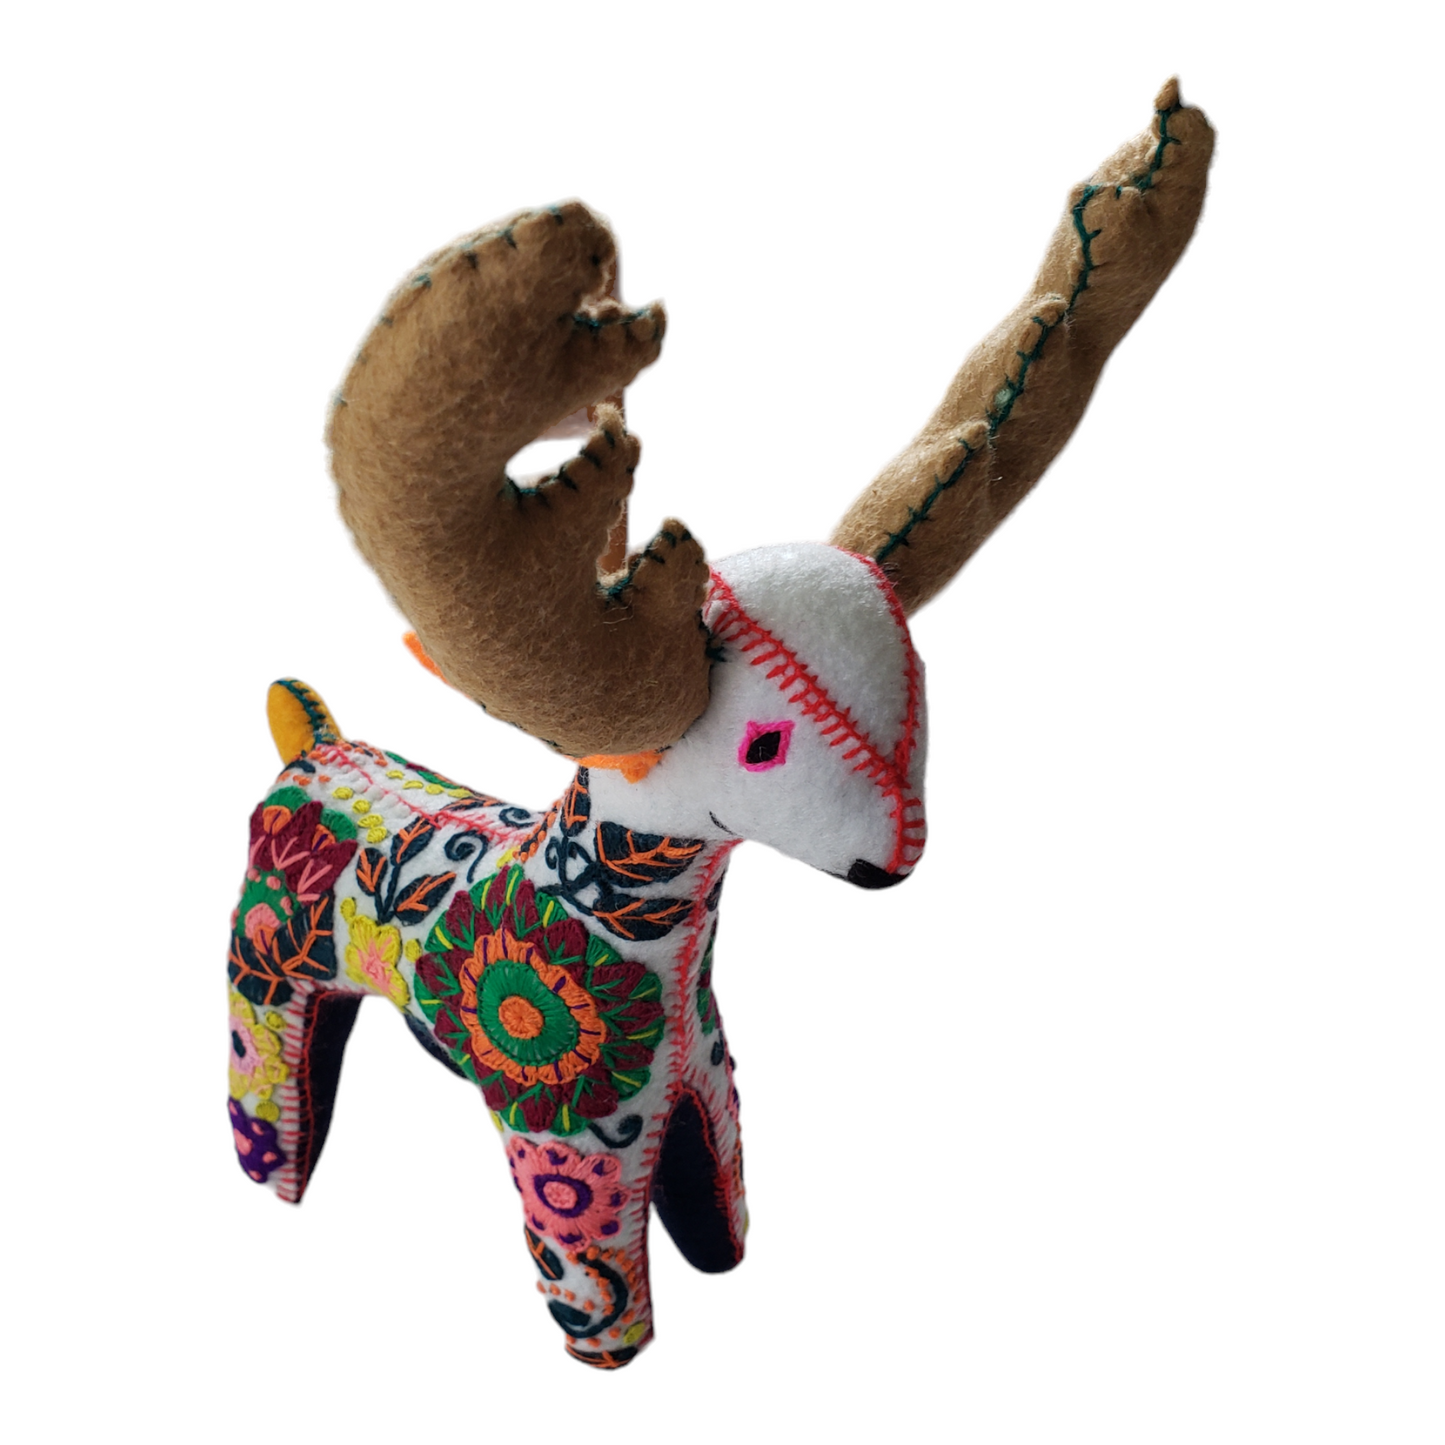 Reindeer Animalito from Chiapas Mexico